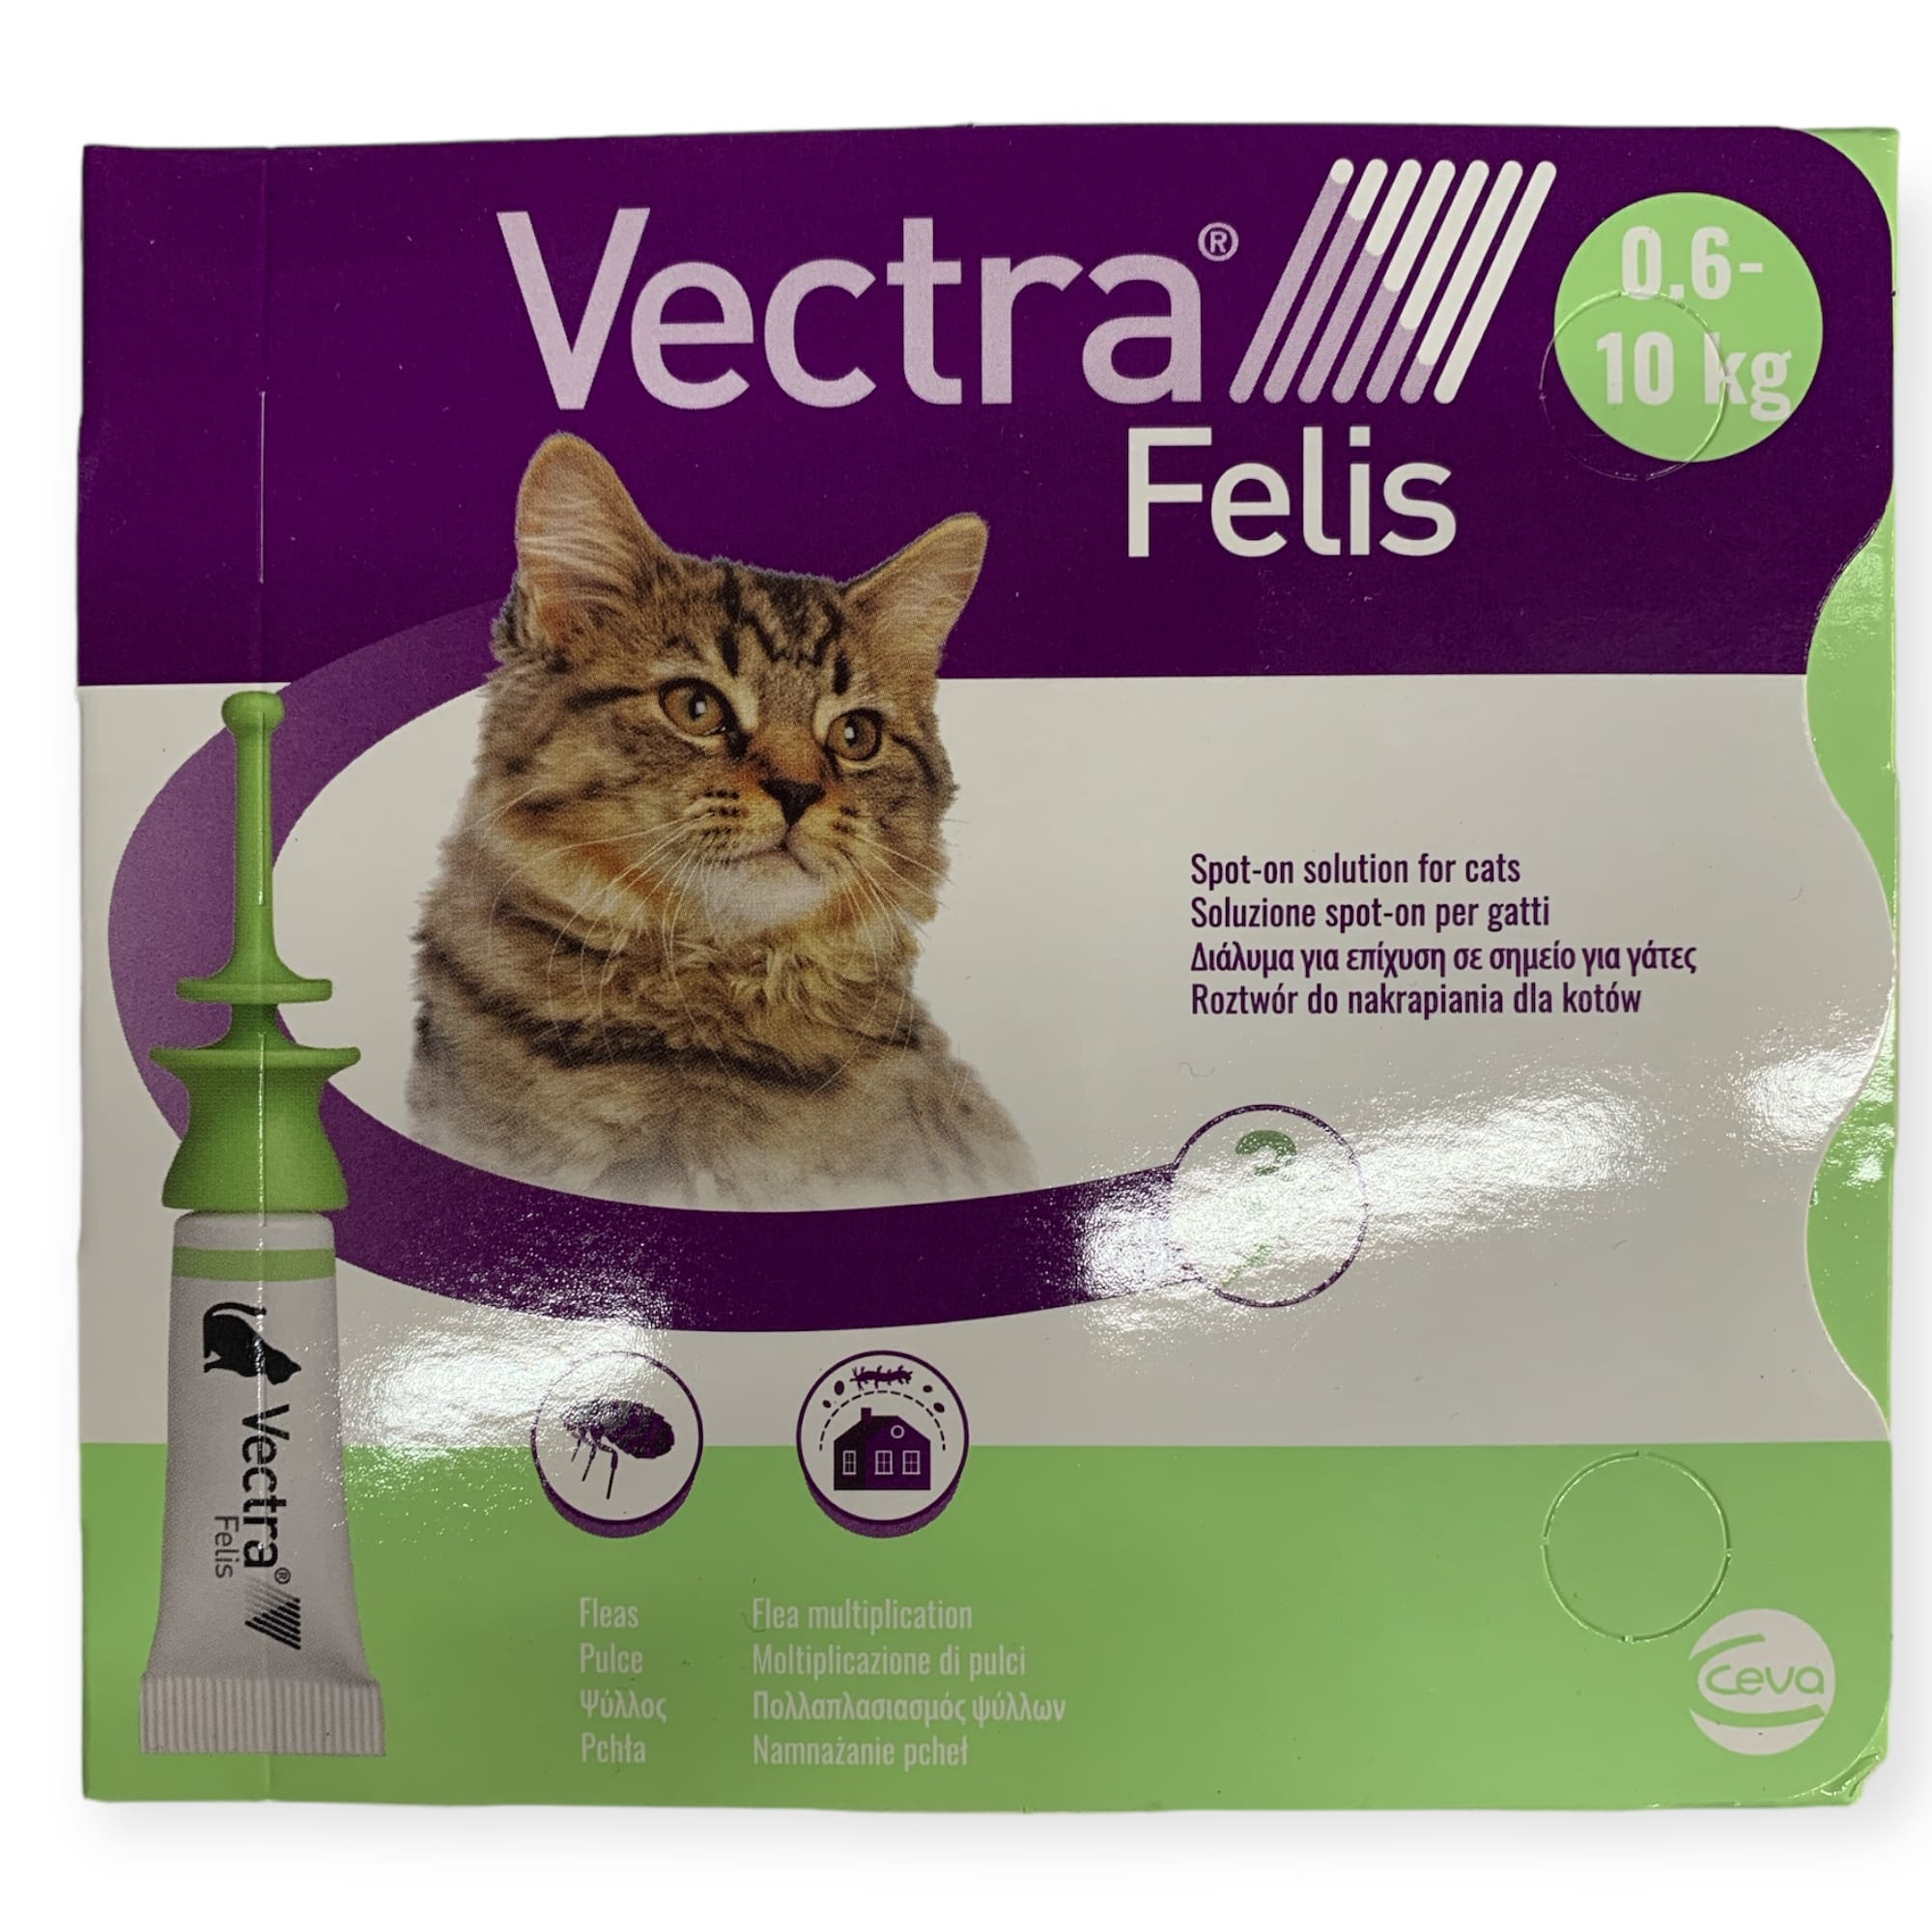 Vectra Felis תרופה נגד פרעושים לחתולים באמפולות